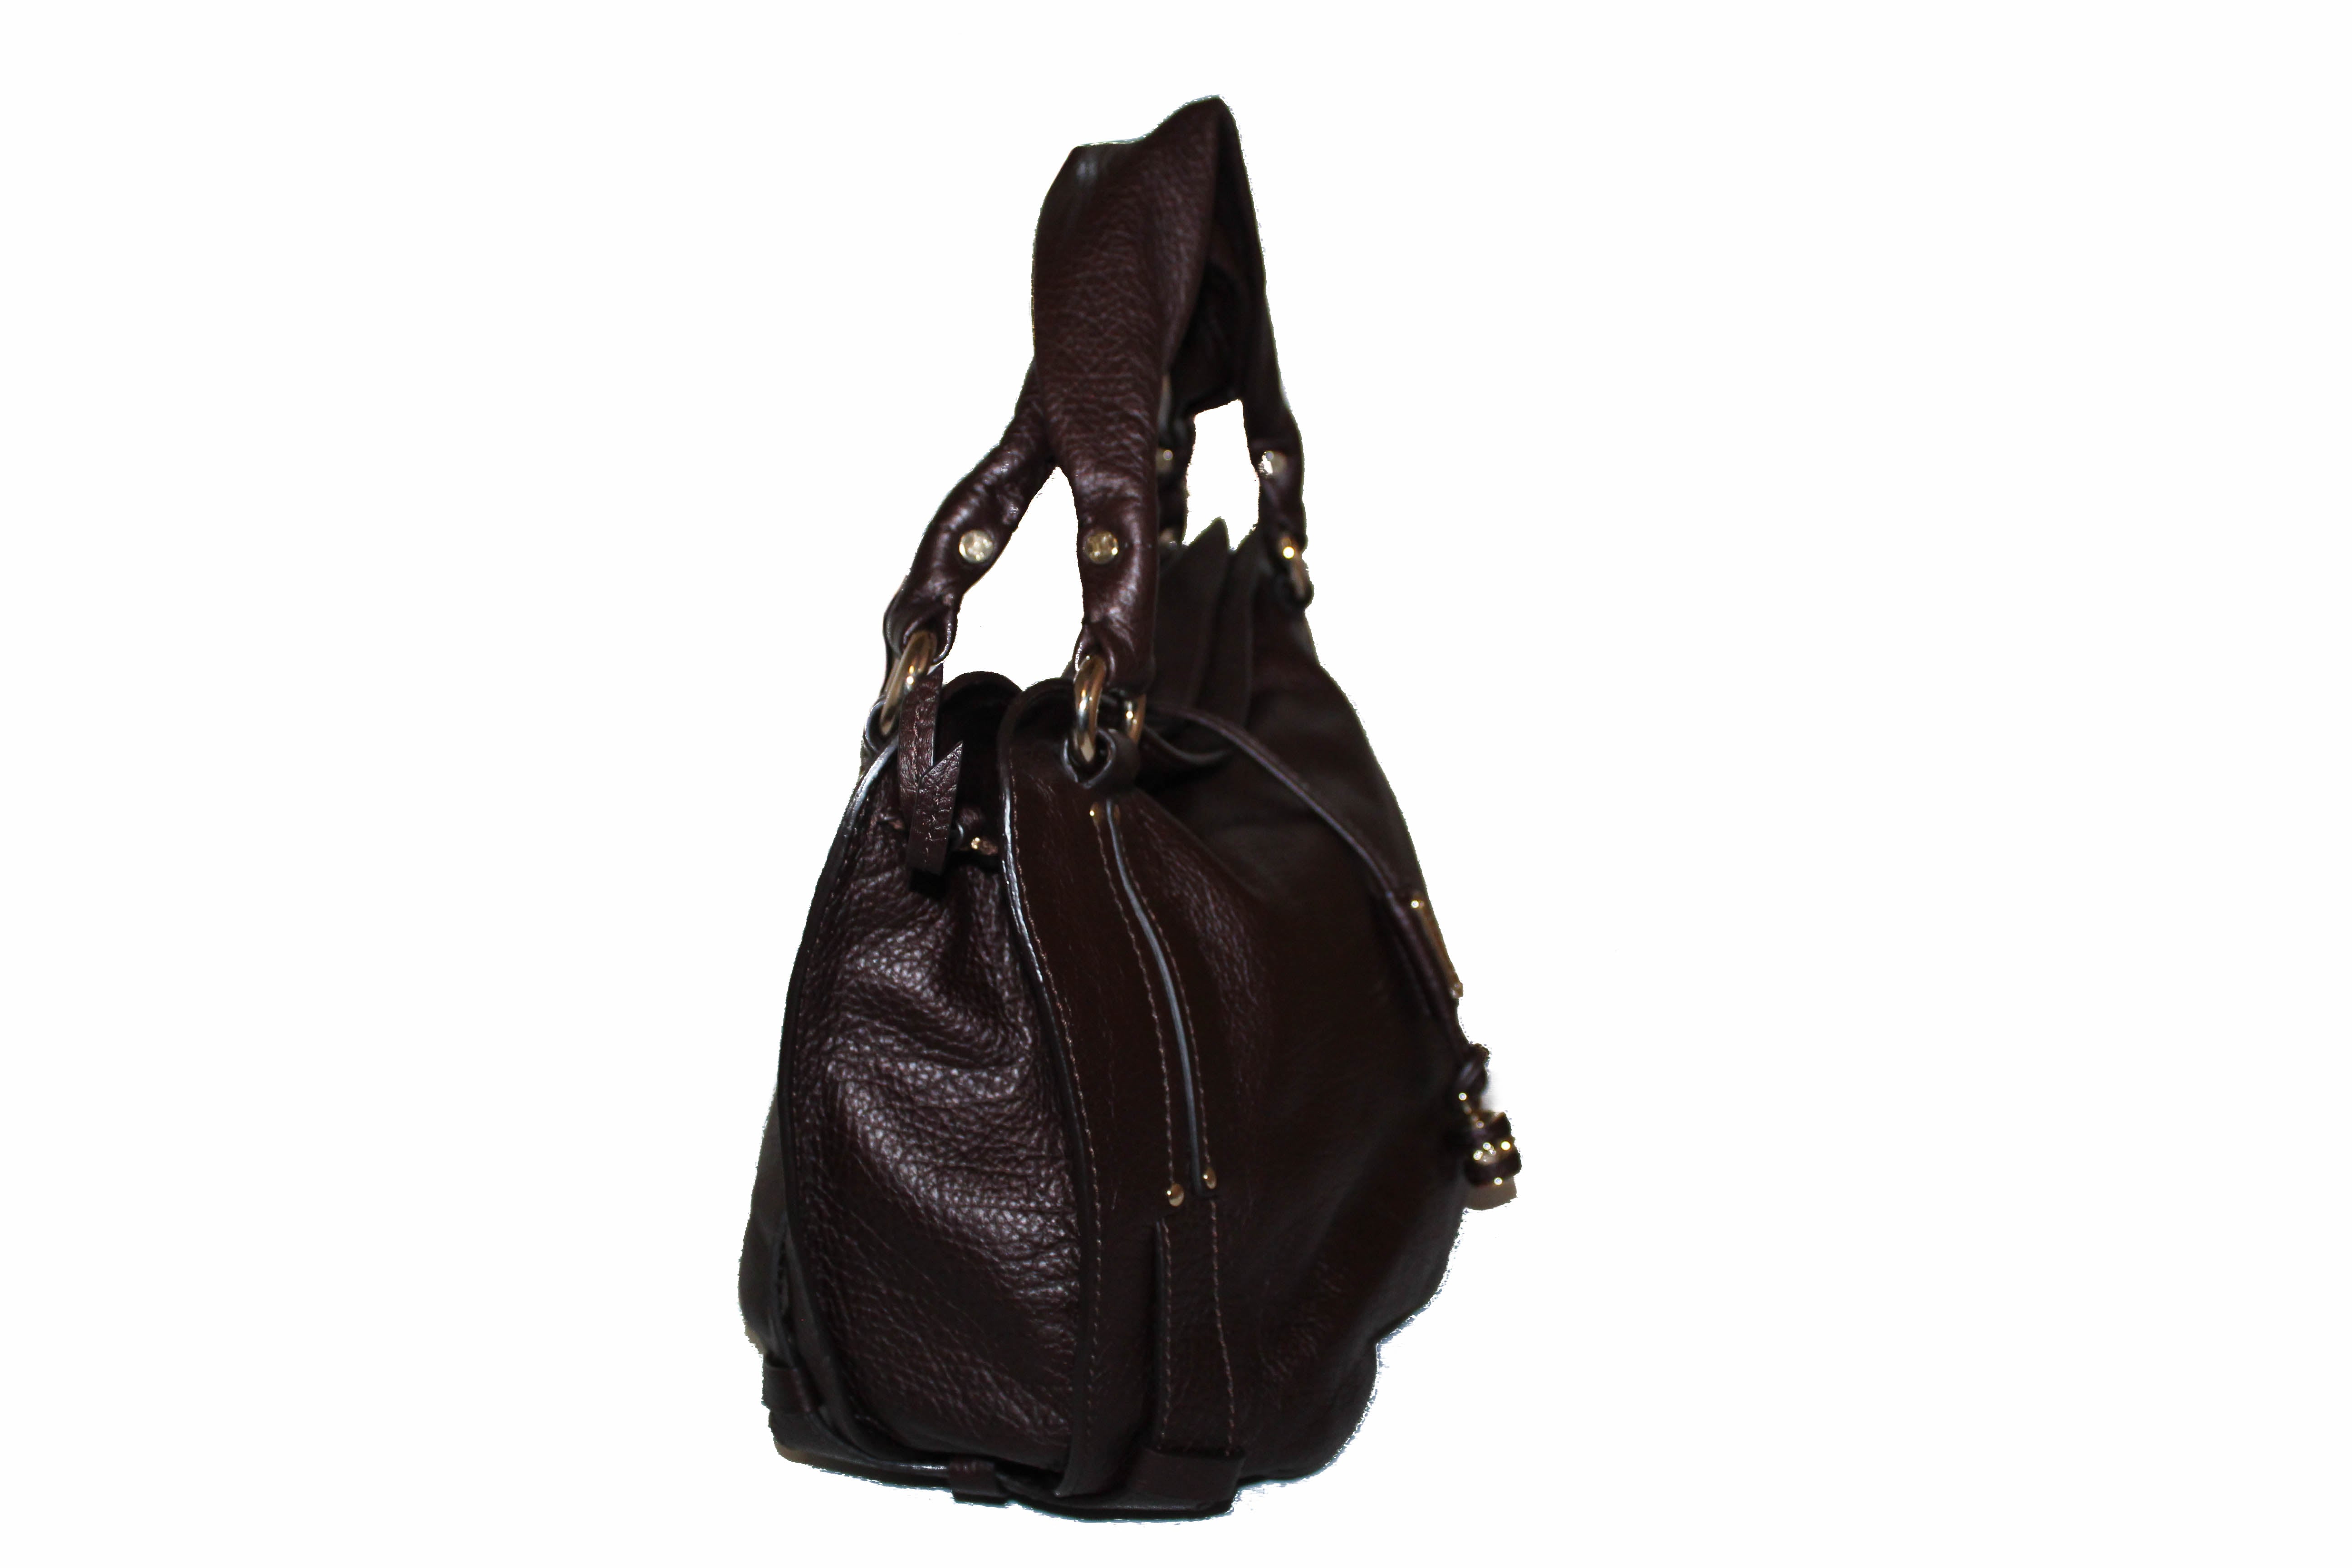 Authentic Celine black patent leather shoulder tote bag